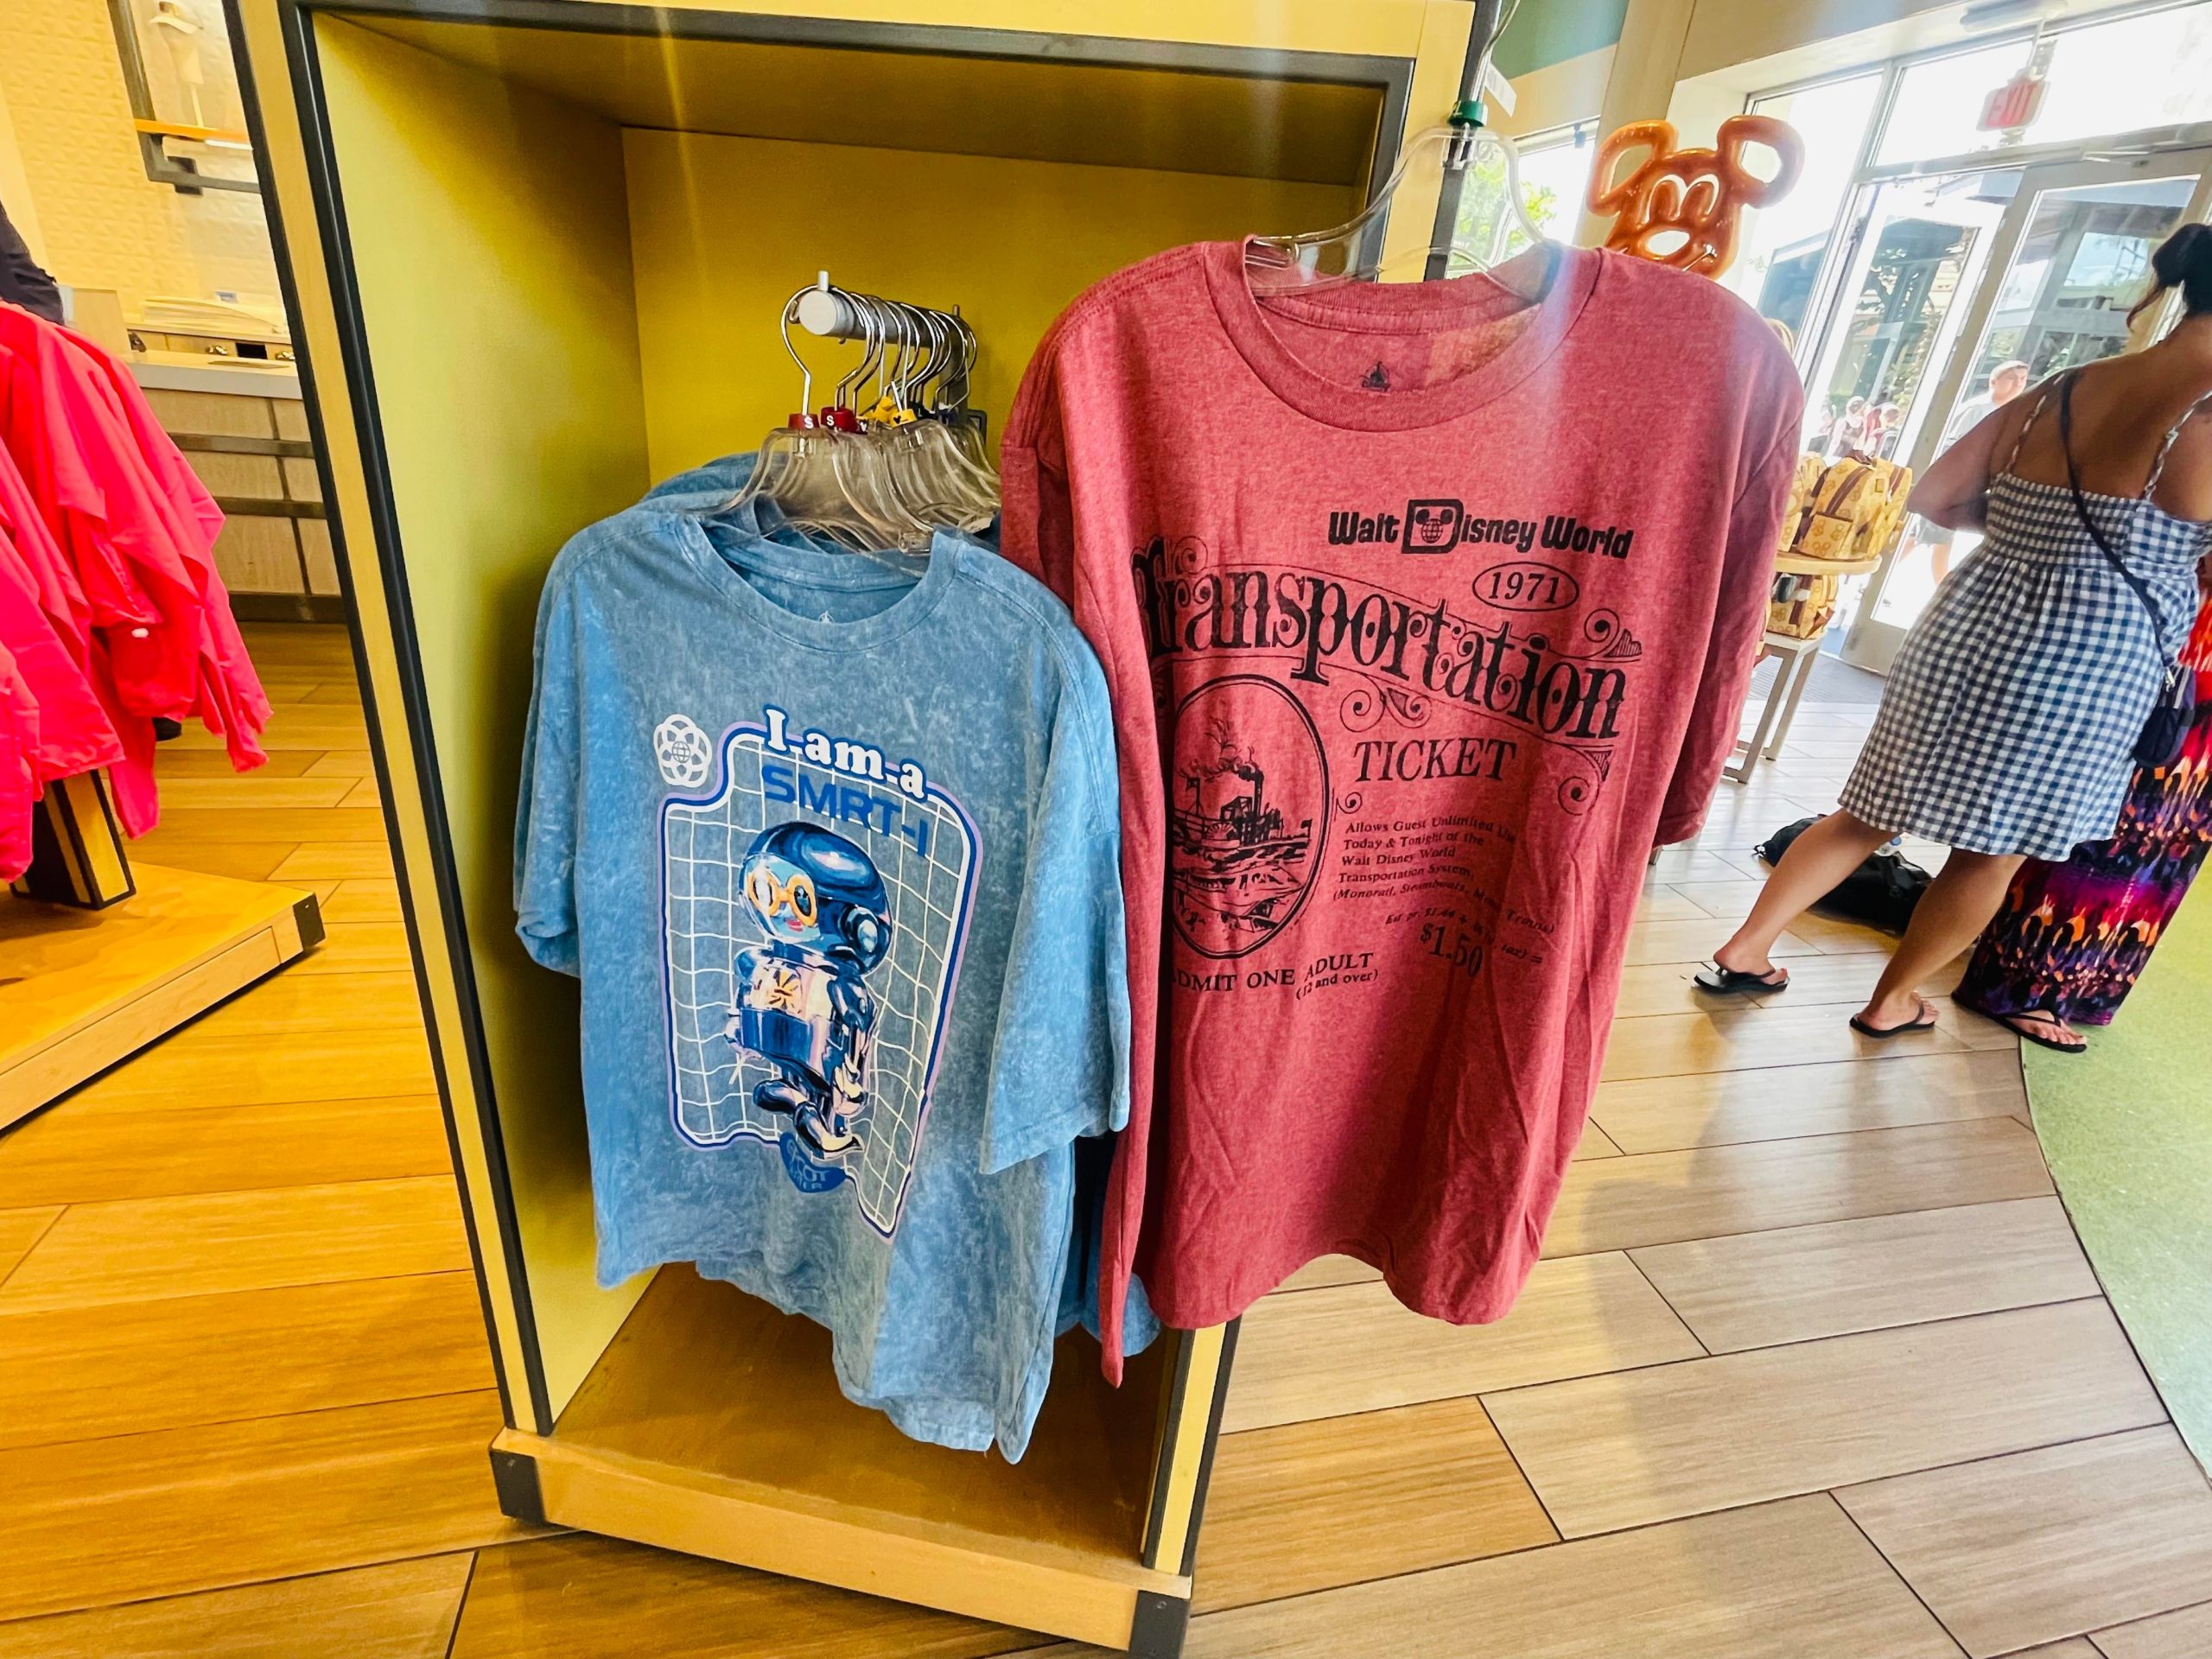 New Vintage Inspired T-Shirts Debut at Disney Springs